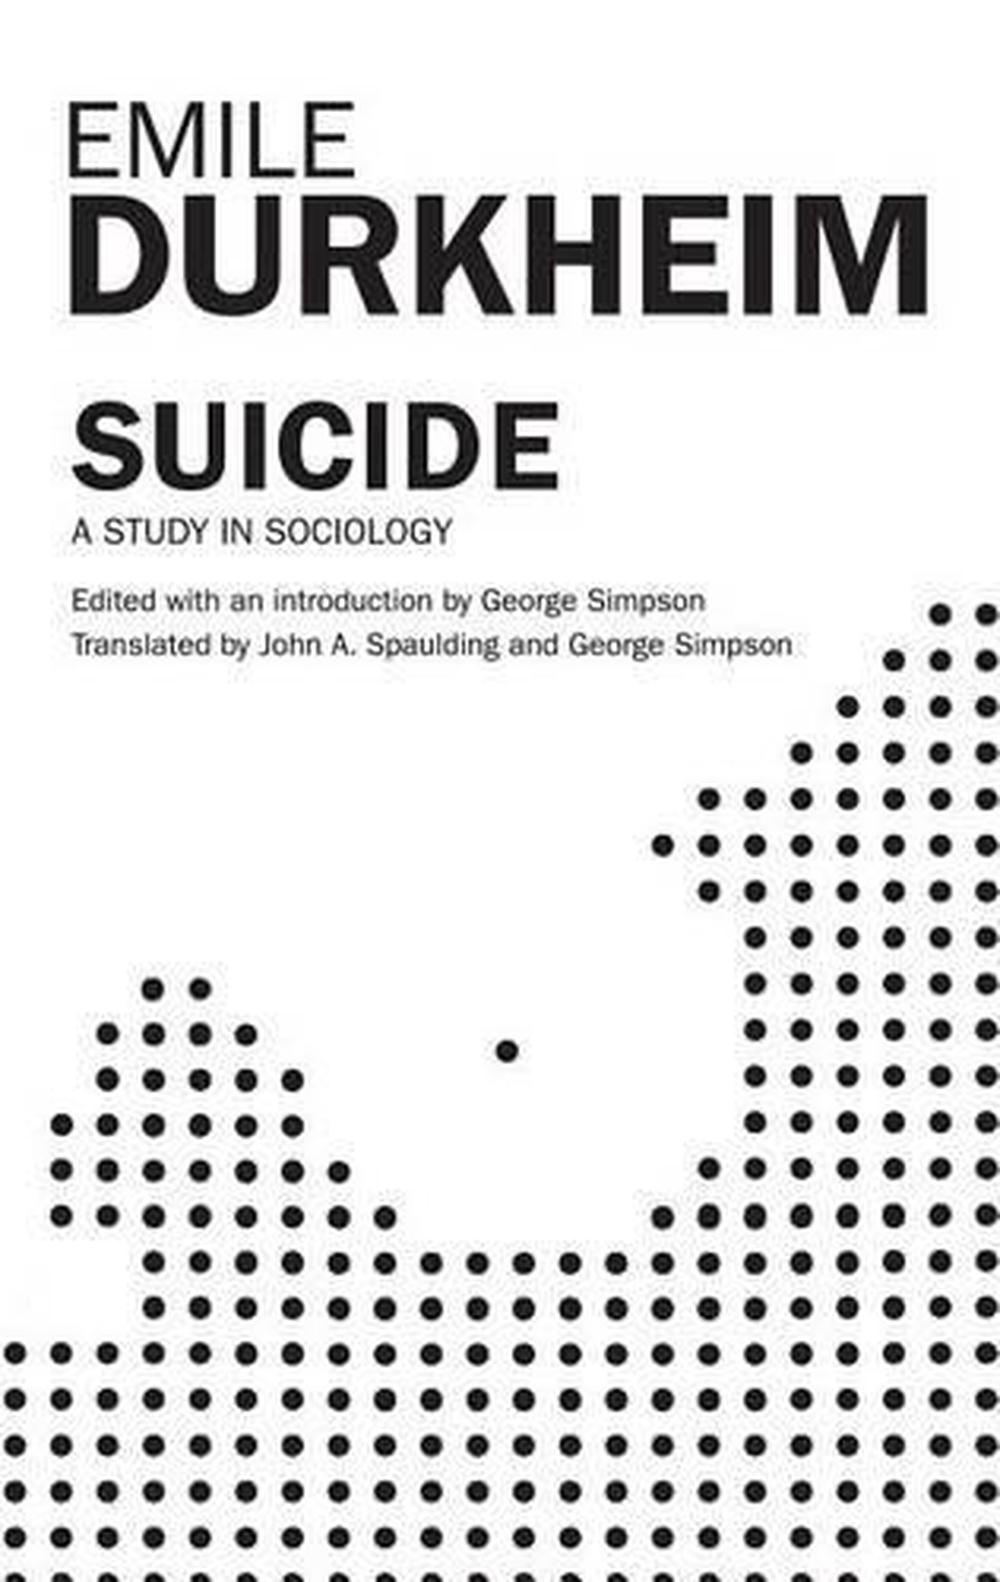 durkheim theory suicide